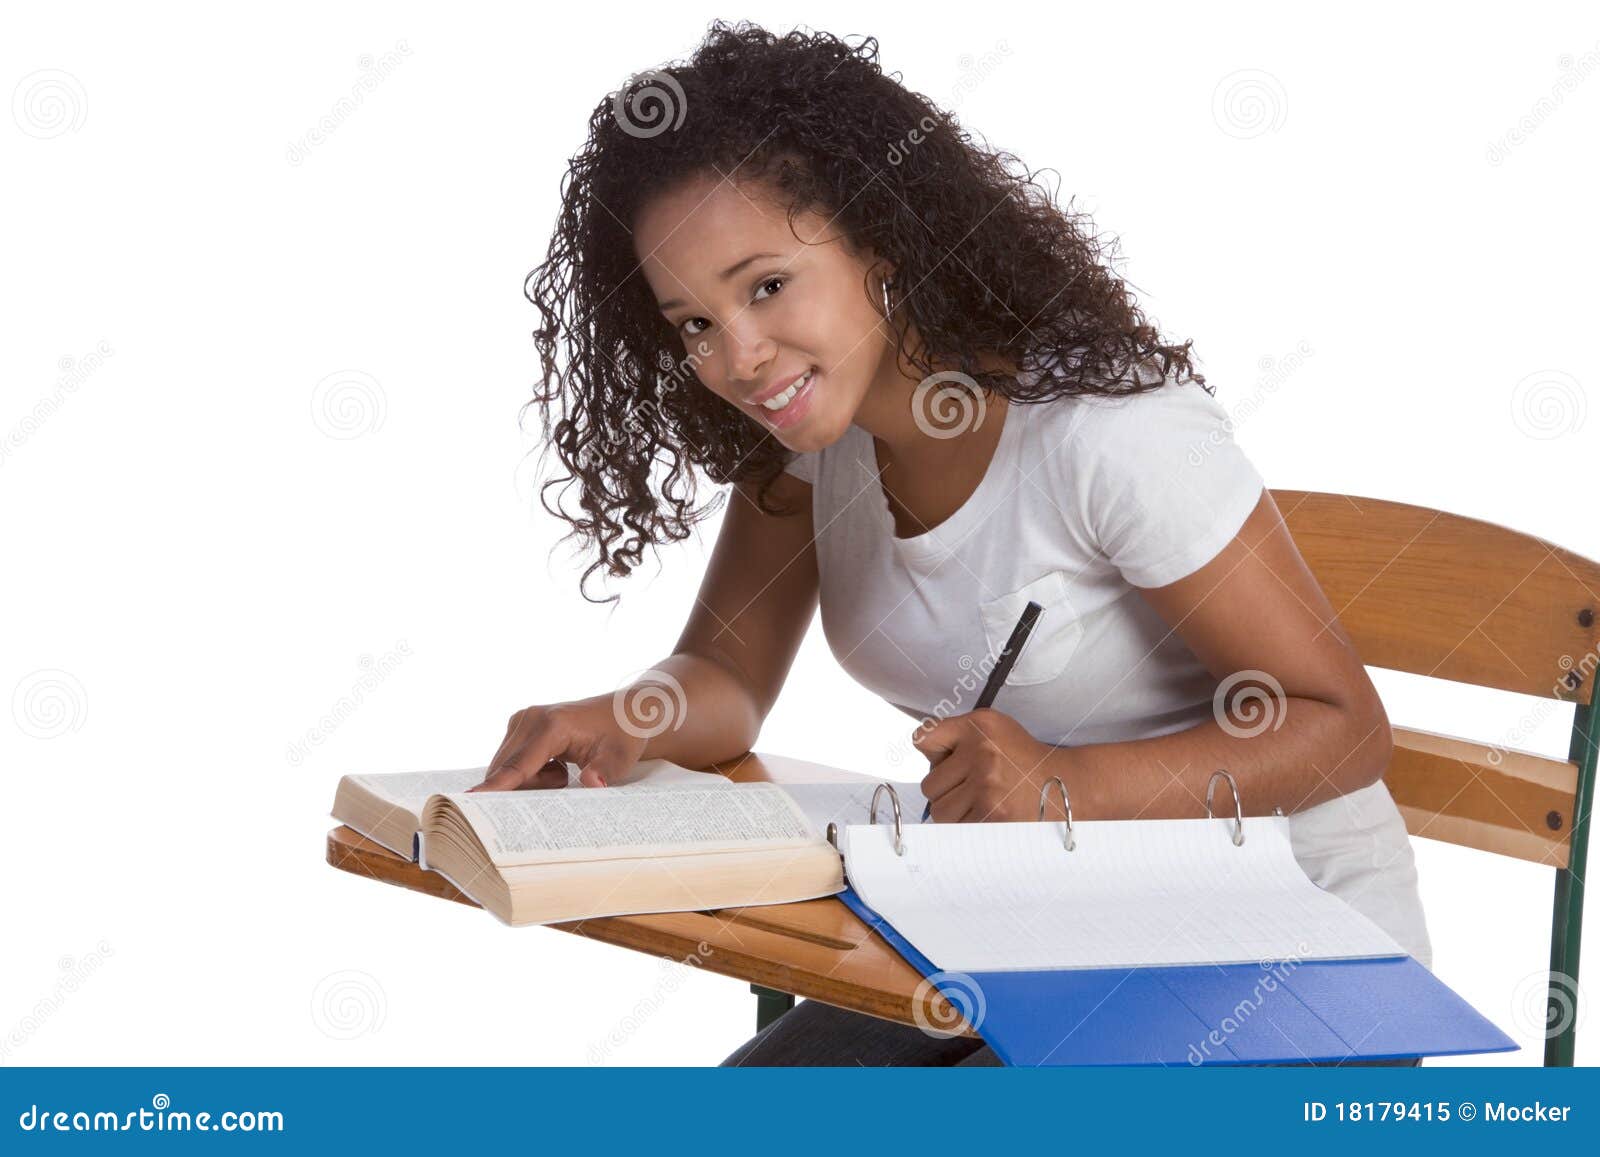 High School Schoolgirl Student By Desk Studying Stock Image